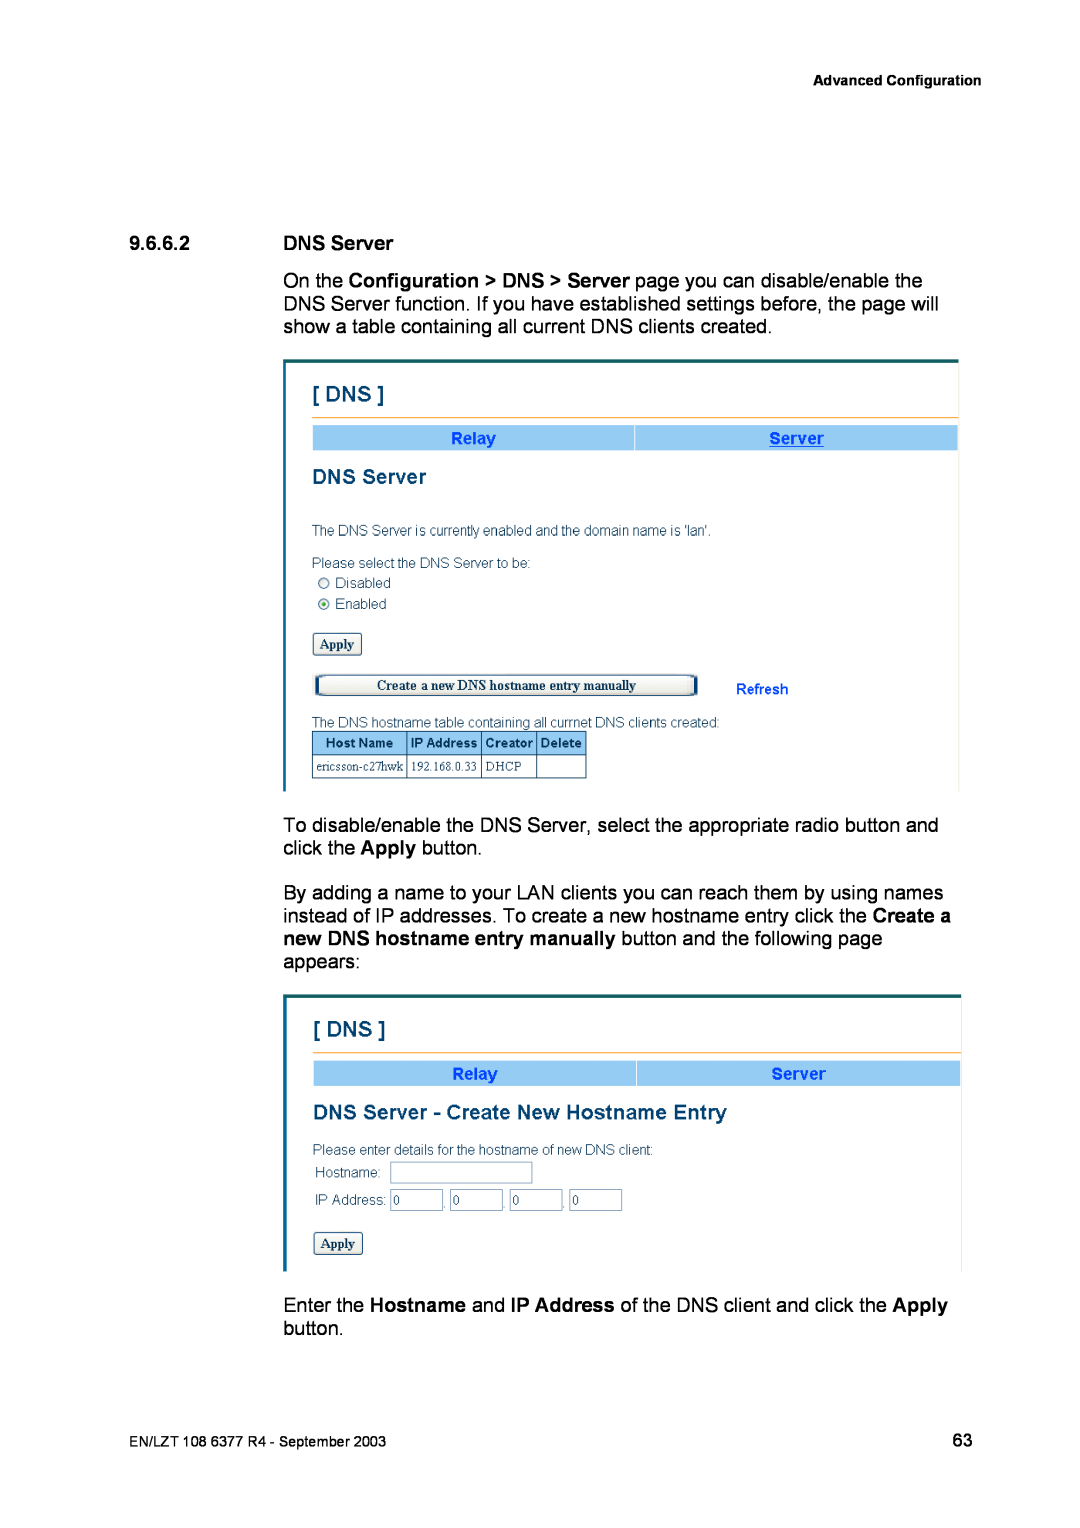 Garmin HN294DP/DI manual DNS Server 